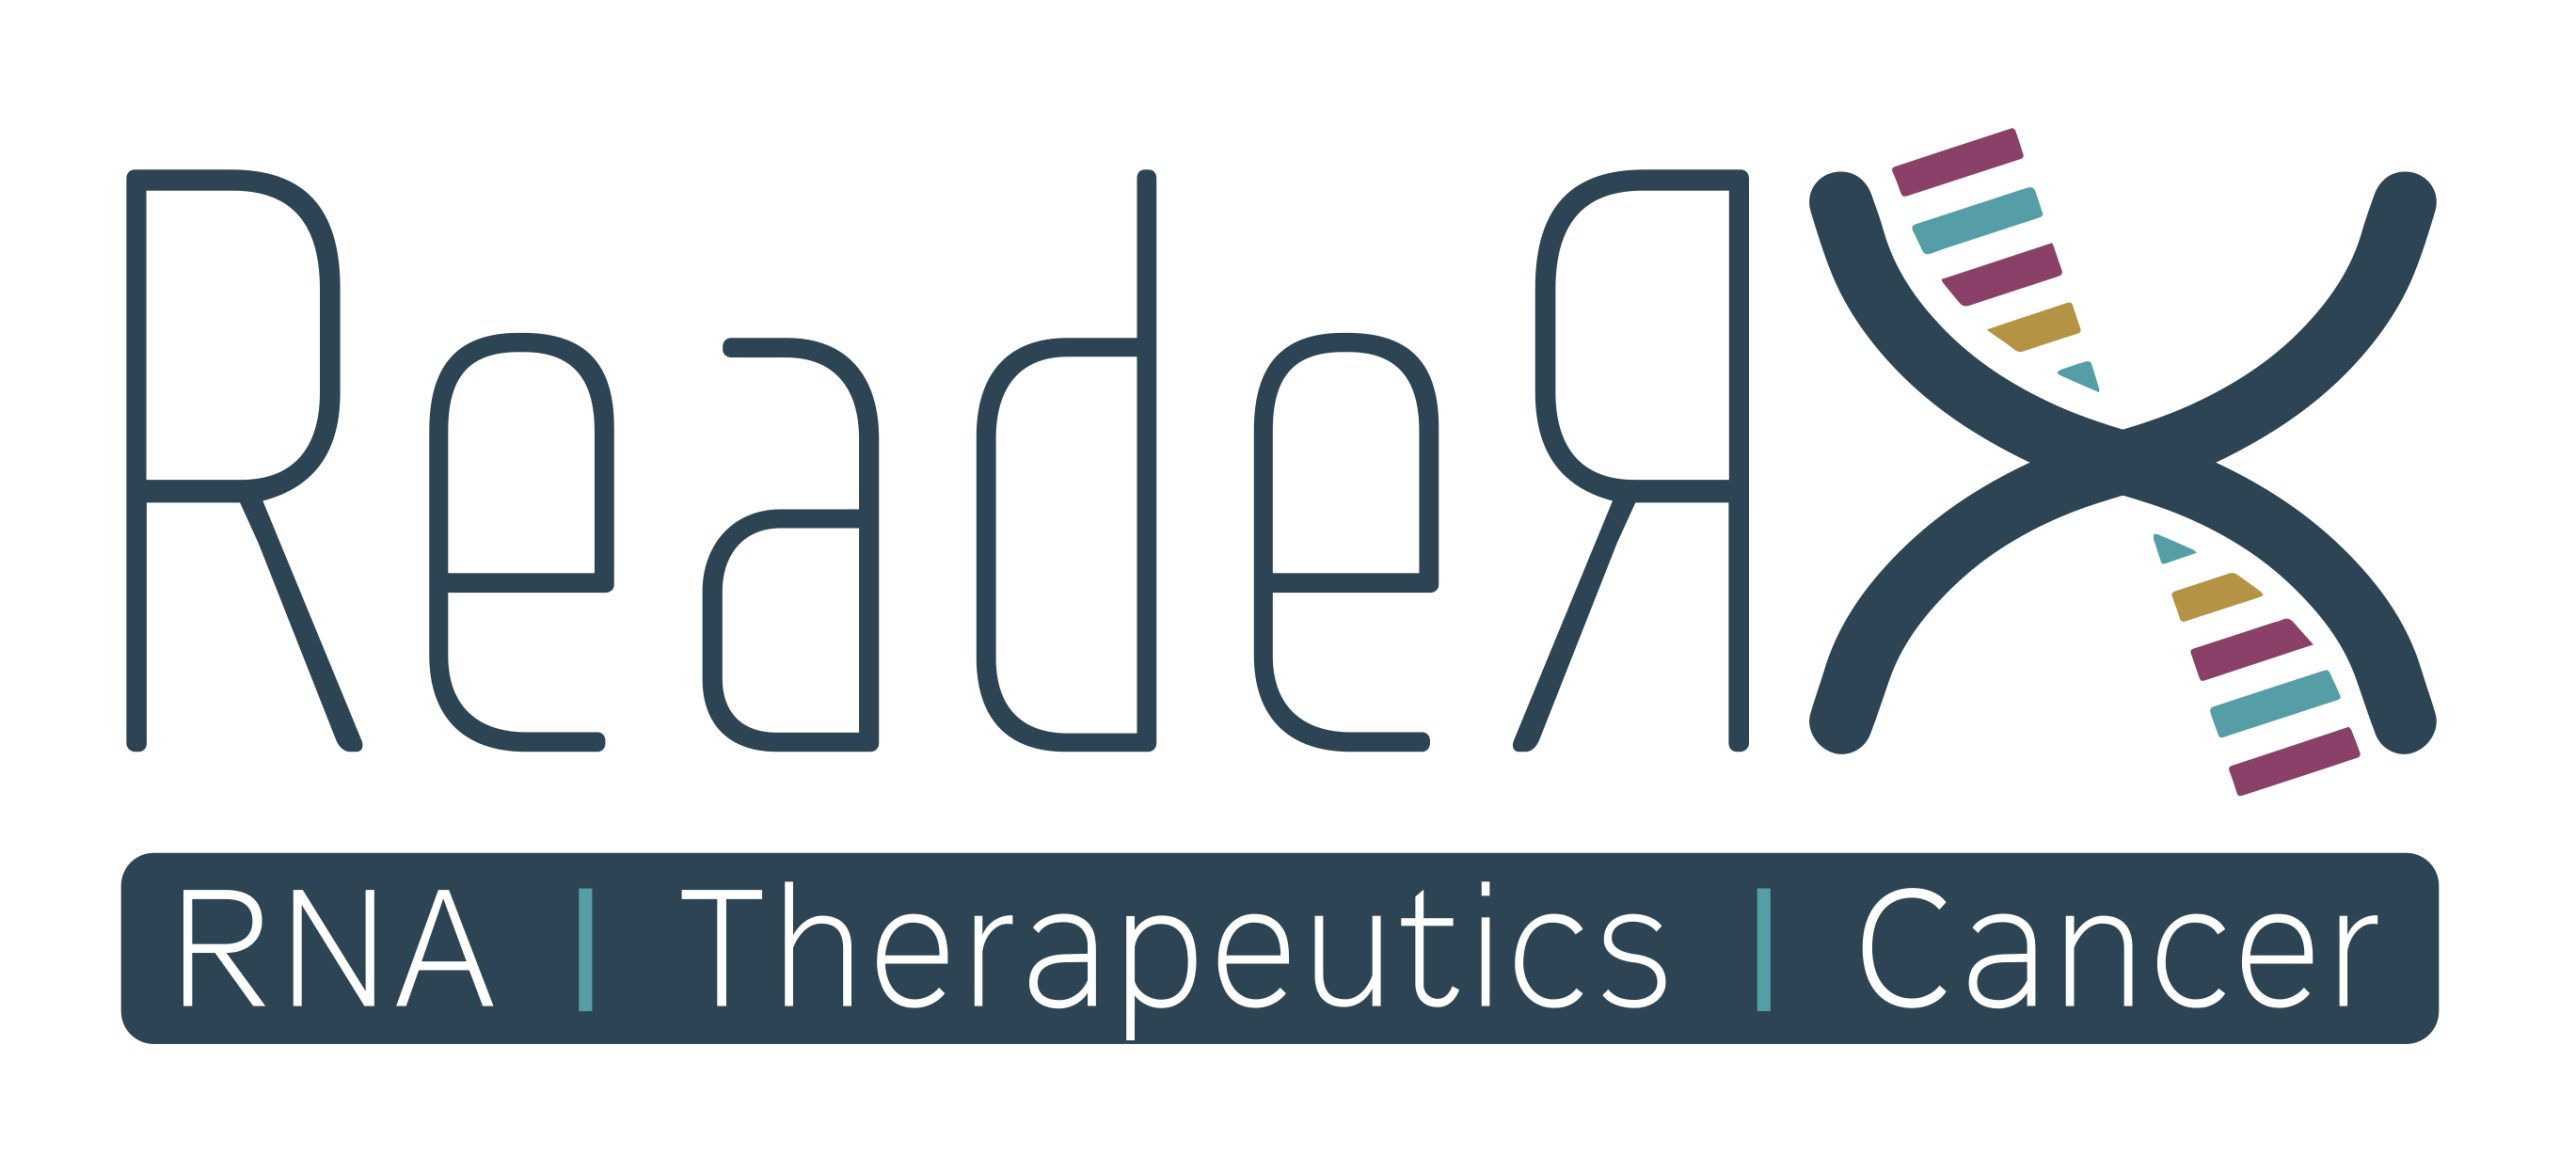 ReadeRx Therapeutics